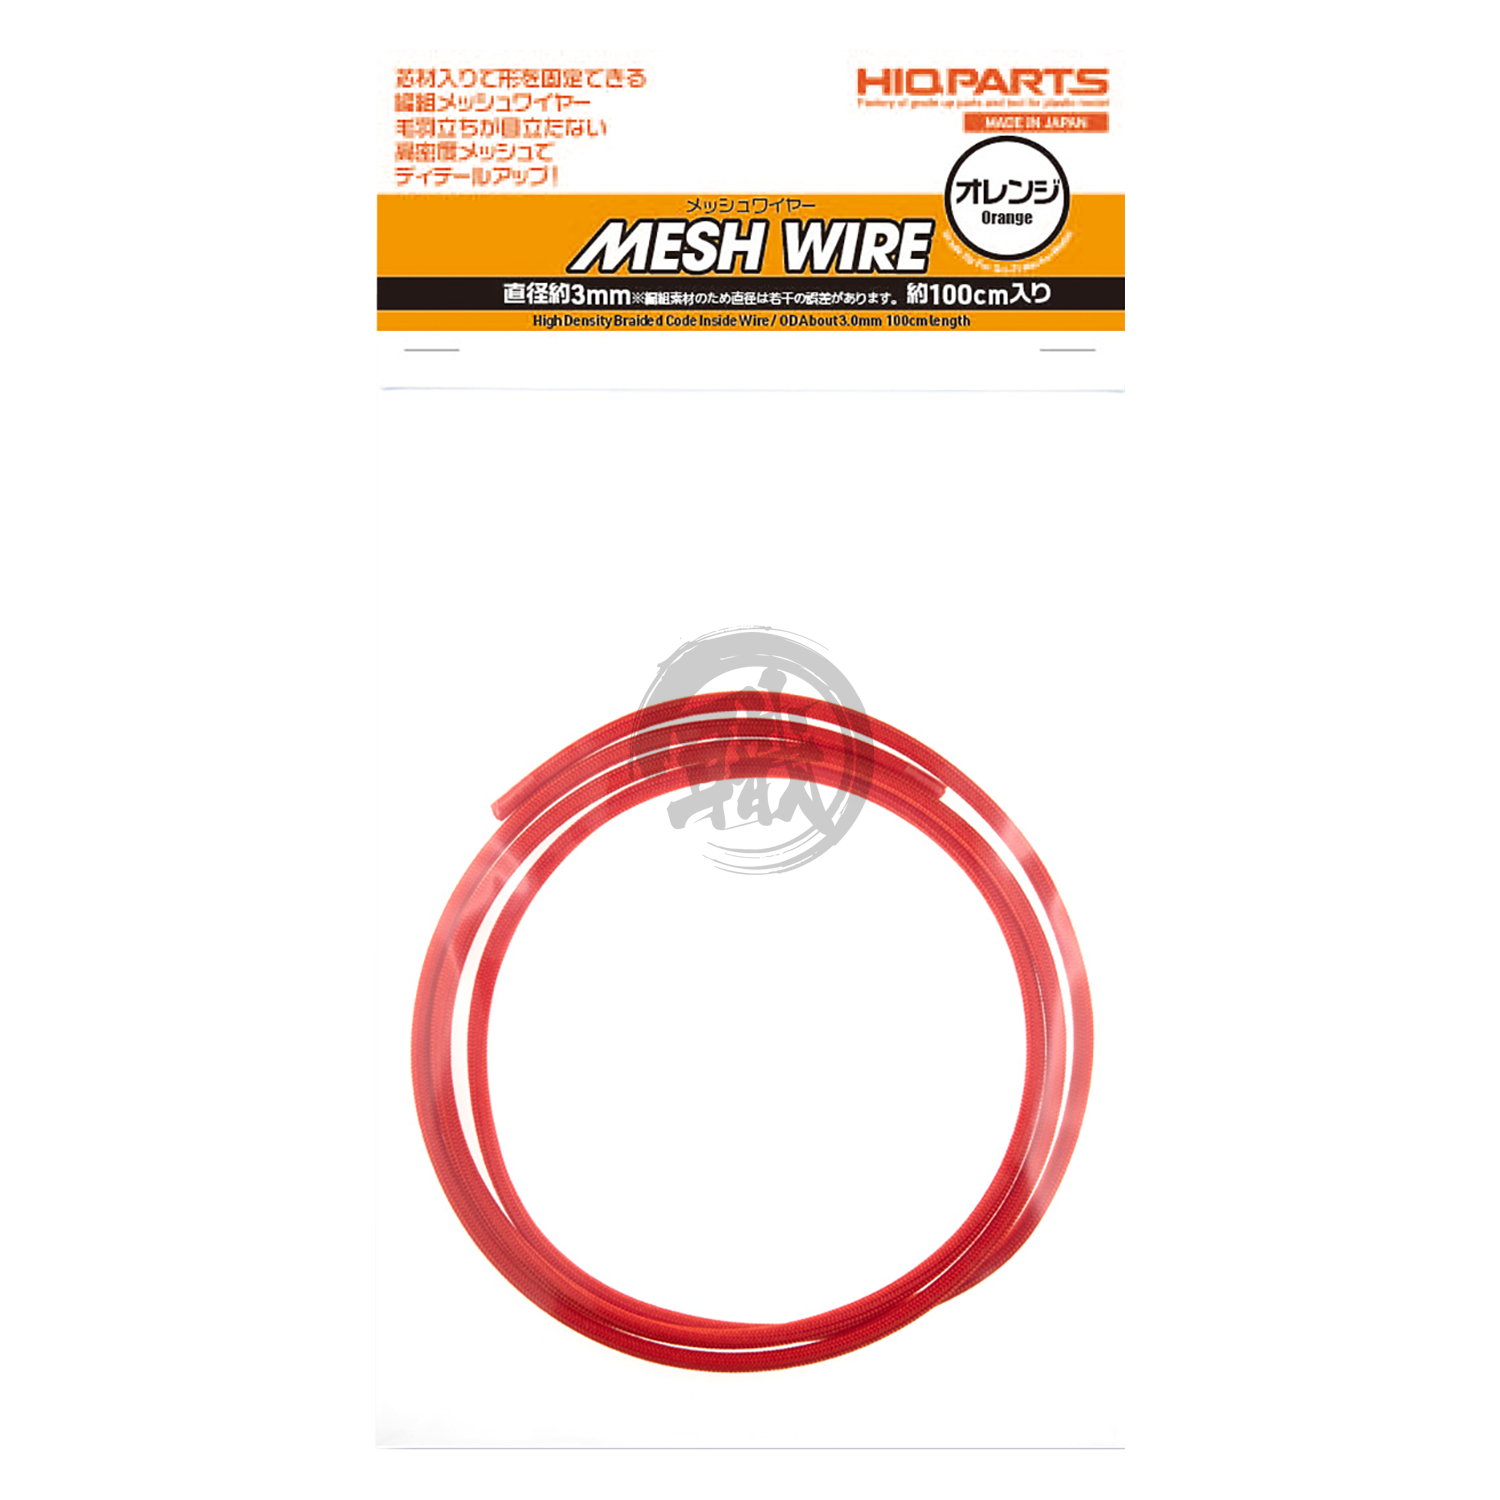 Mesh Wire [Orange] [3.0mm] - ShokuninGunpla